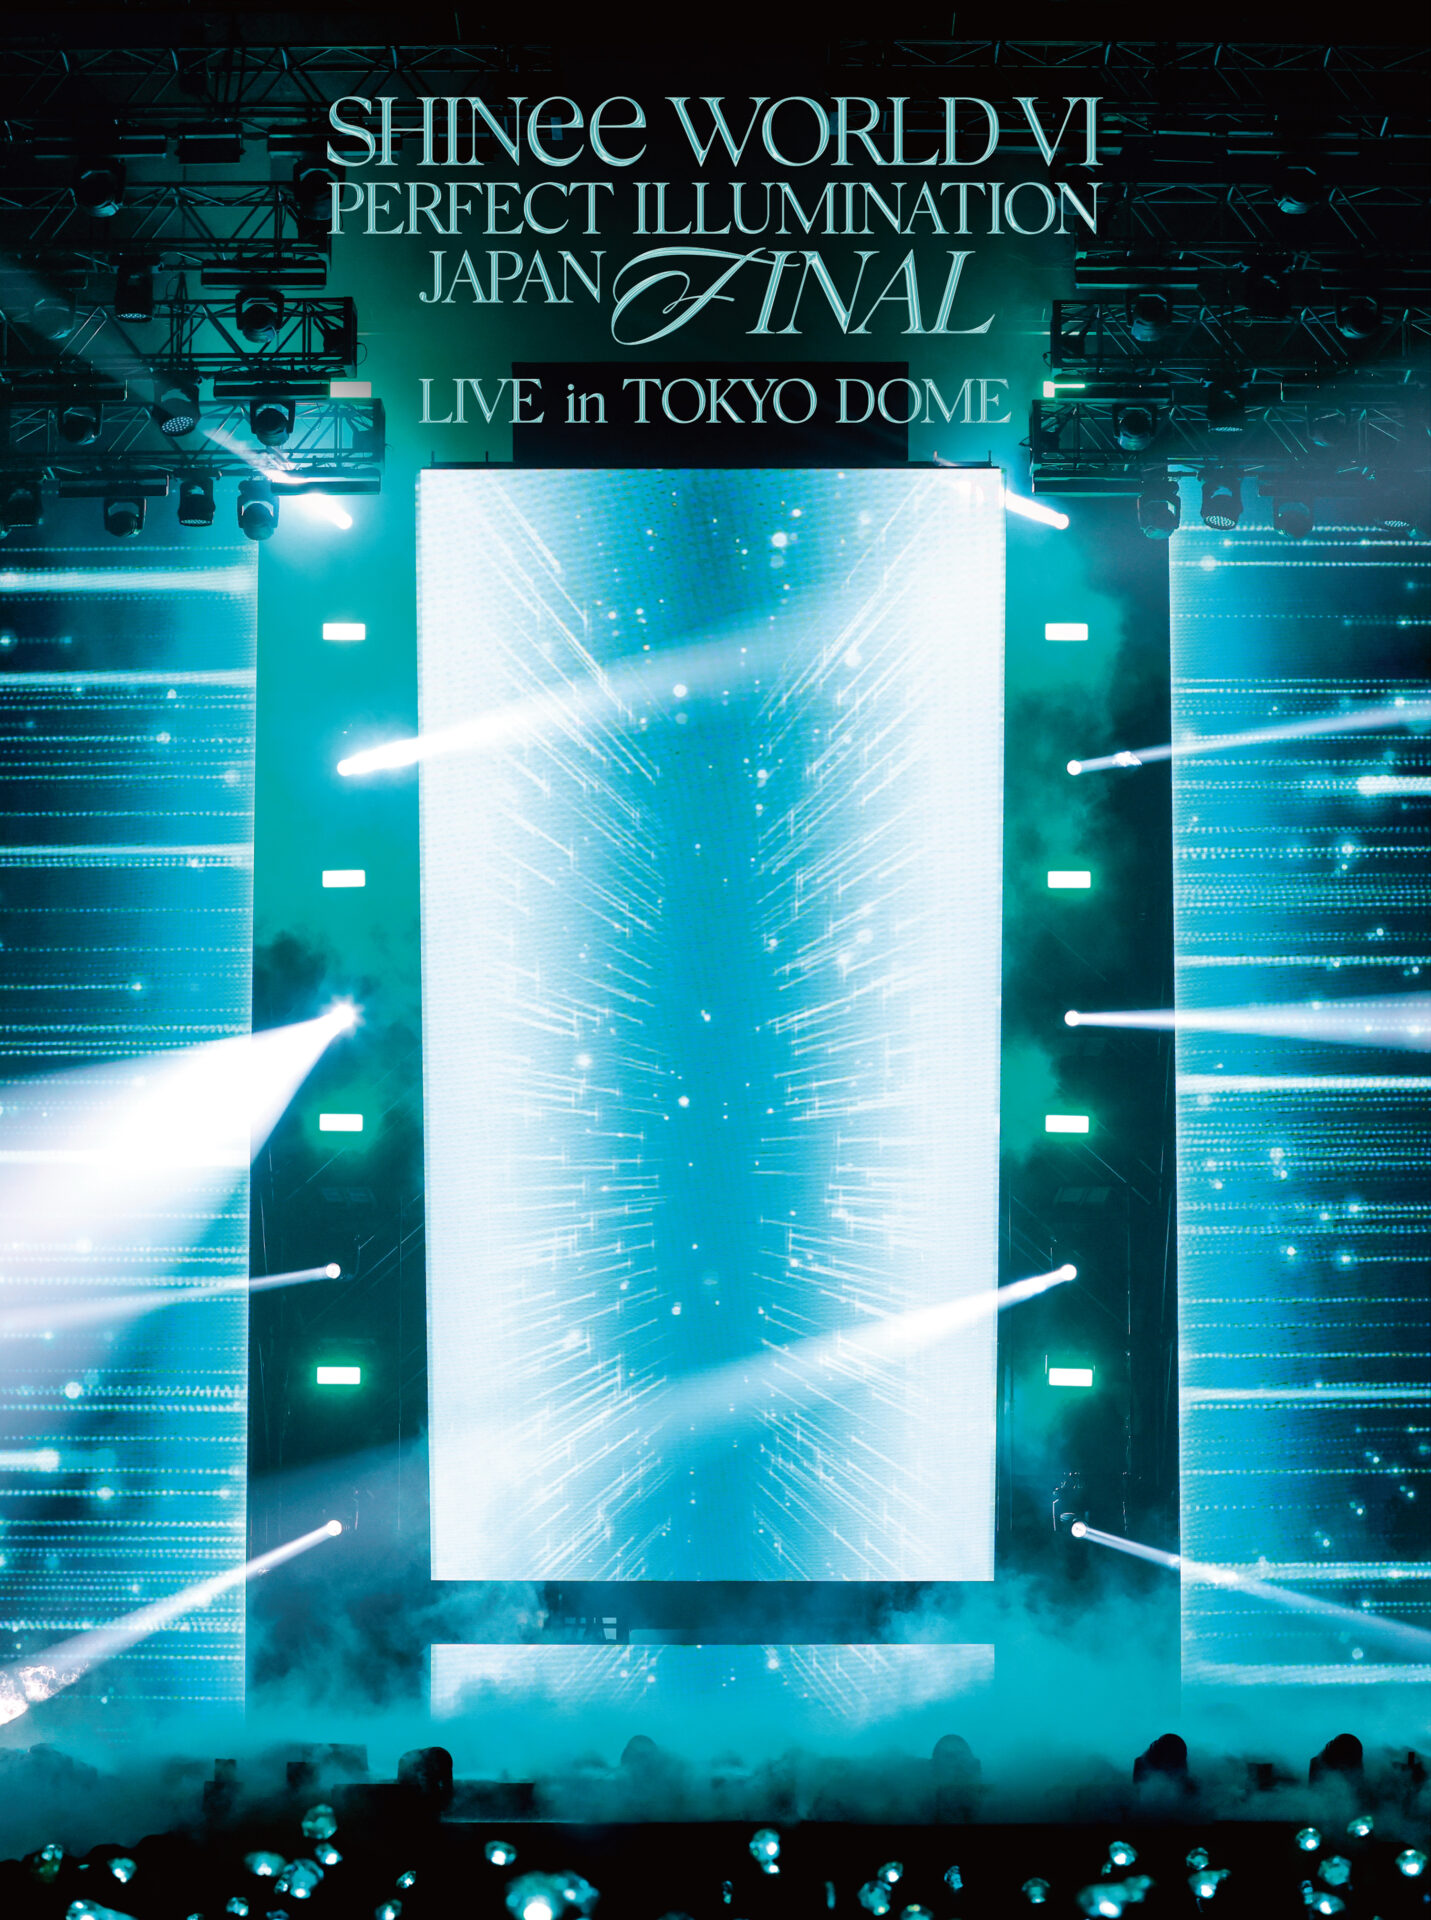 『SHINee WORLD VI [PERFECT ILLUMINATION] JAPAN FINAL LIVE in TOKYO DOME』初回生産限定盤ジャケット